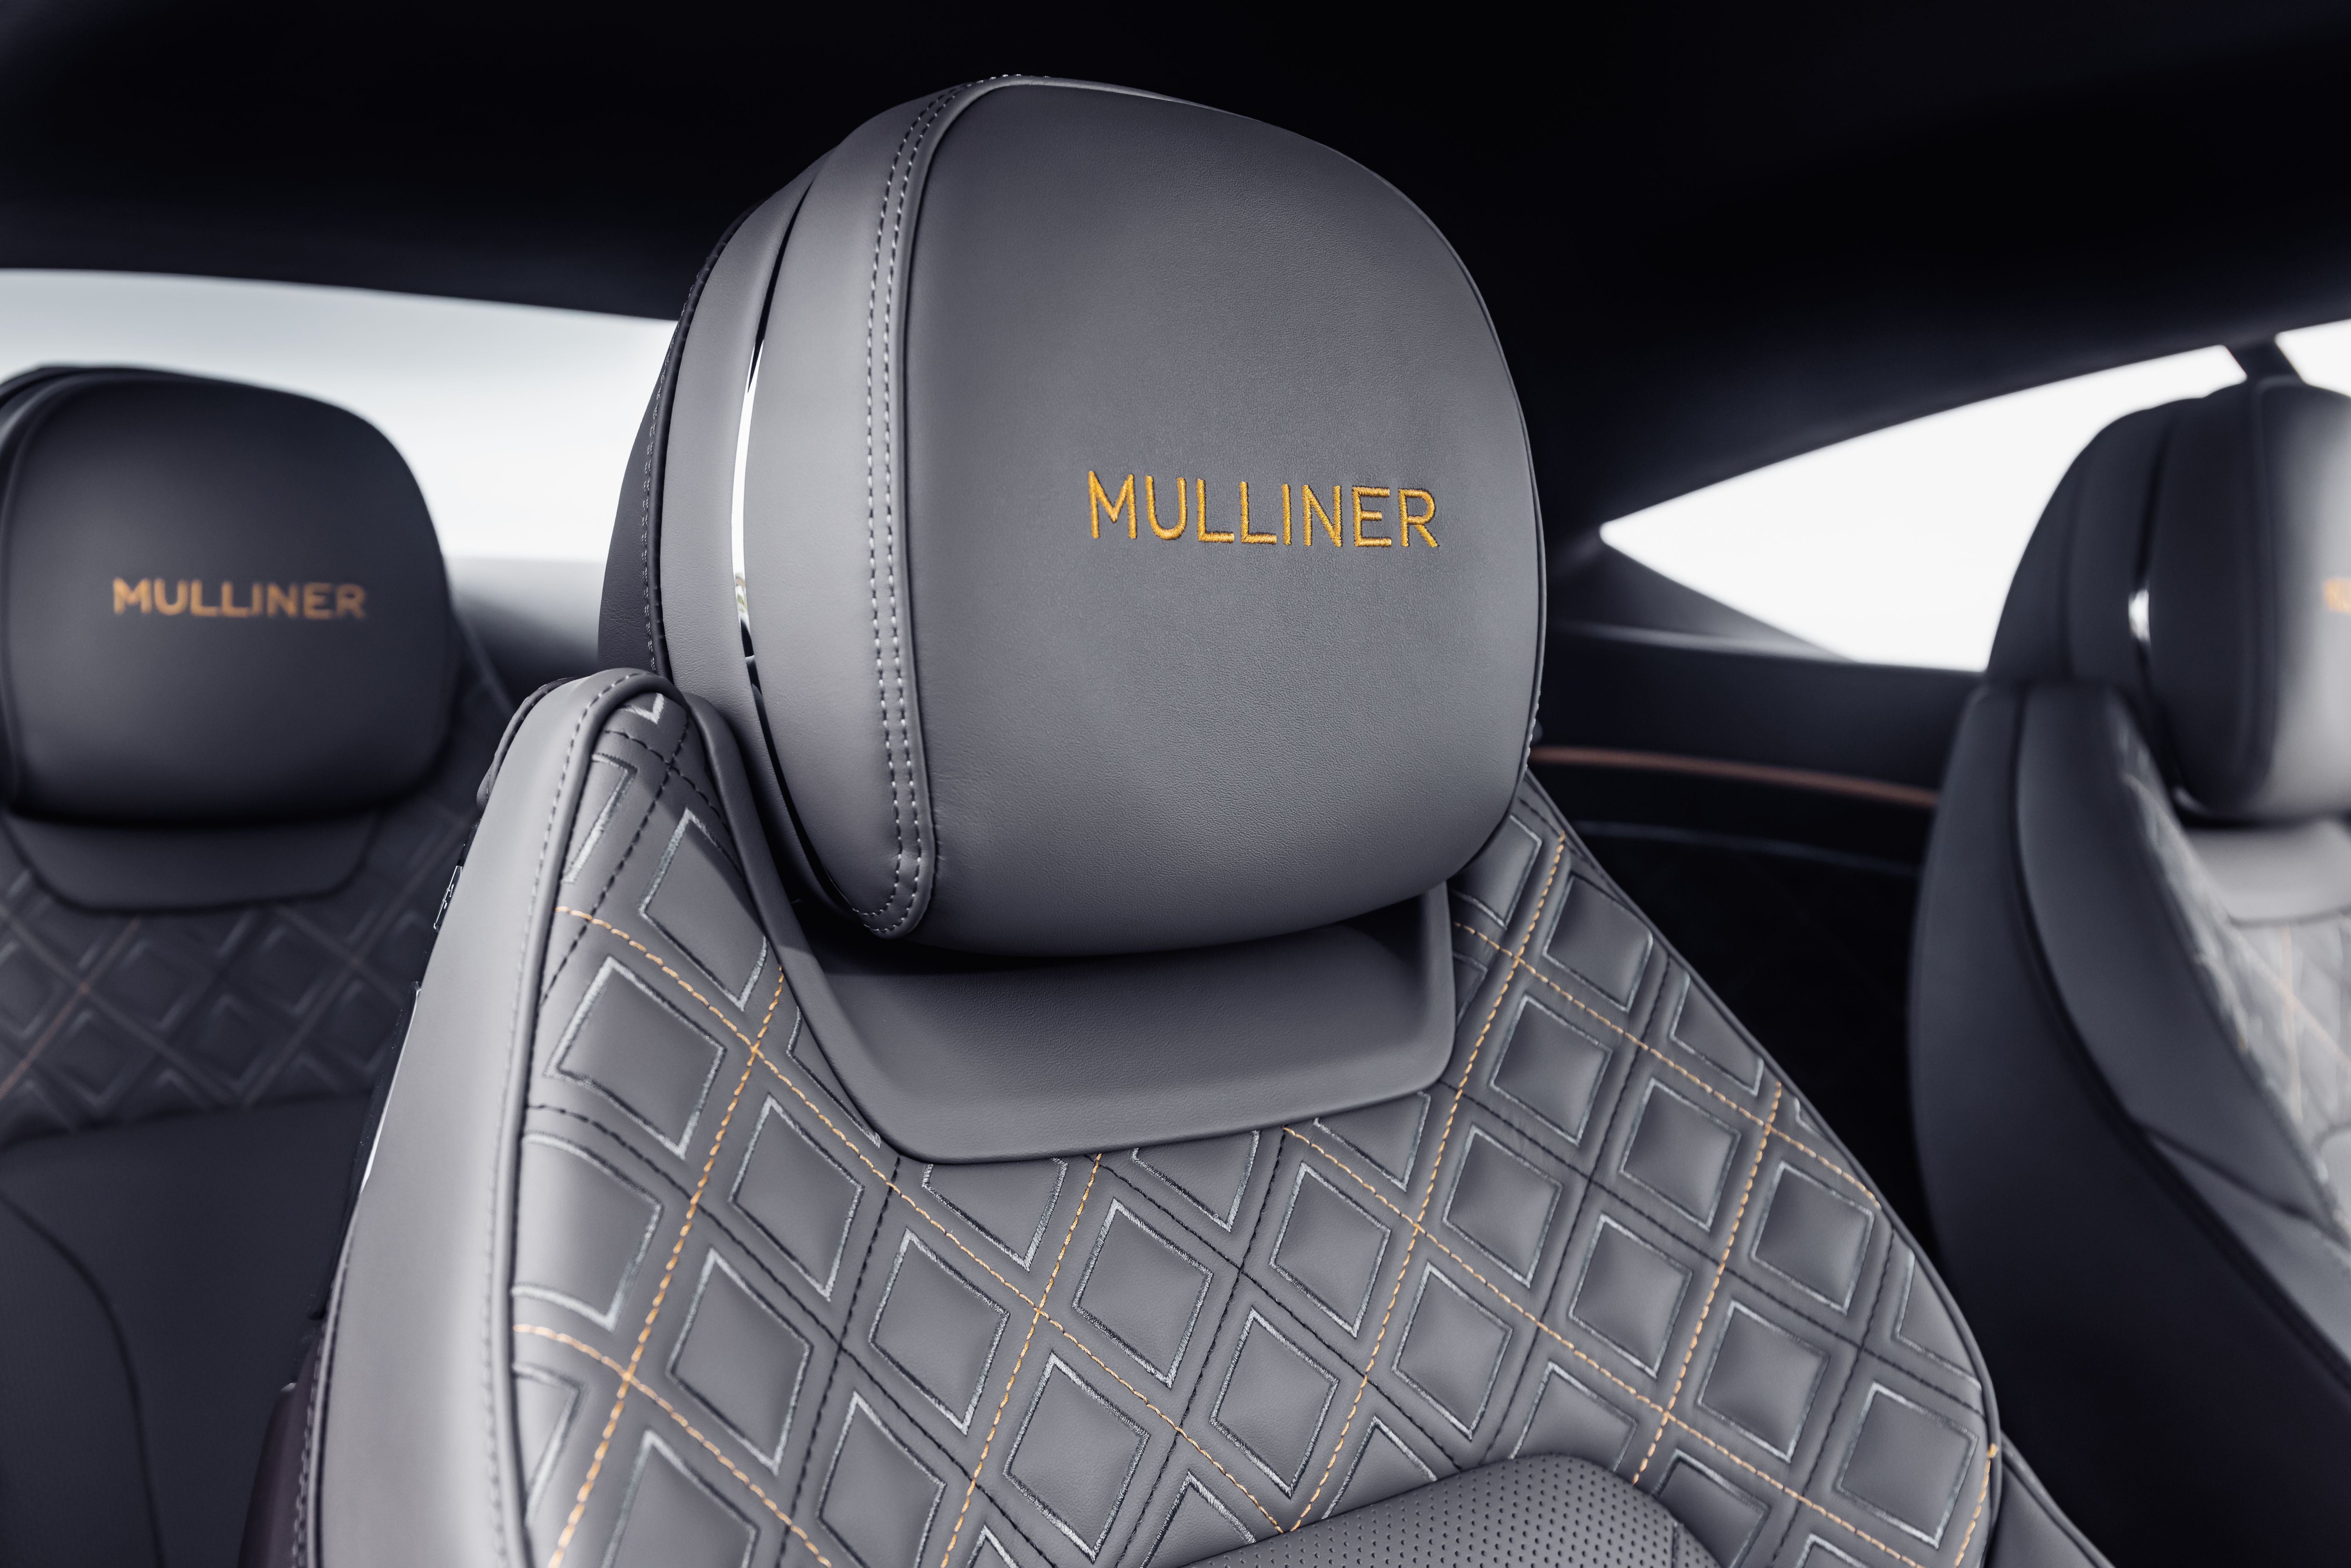 Continental GT Mulliner seat black`